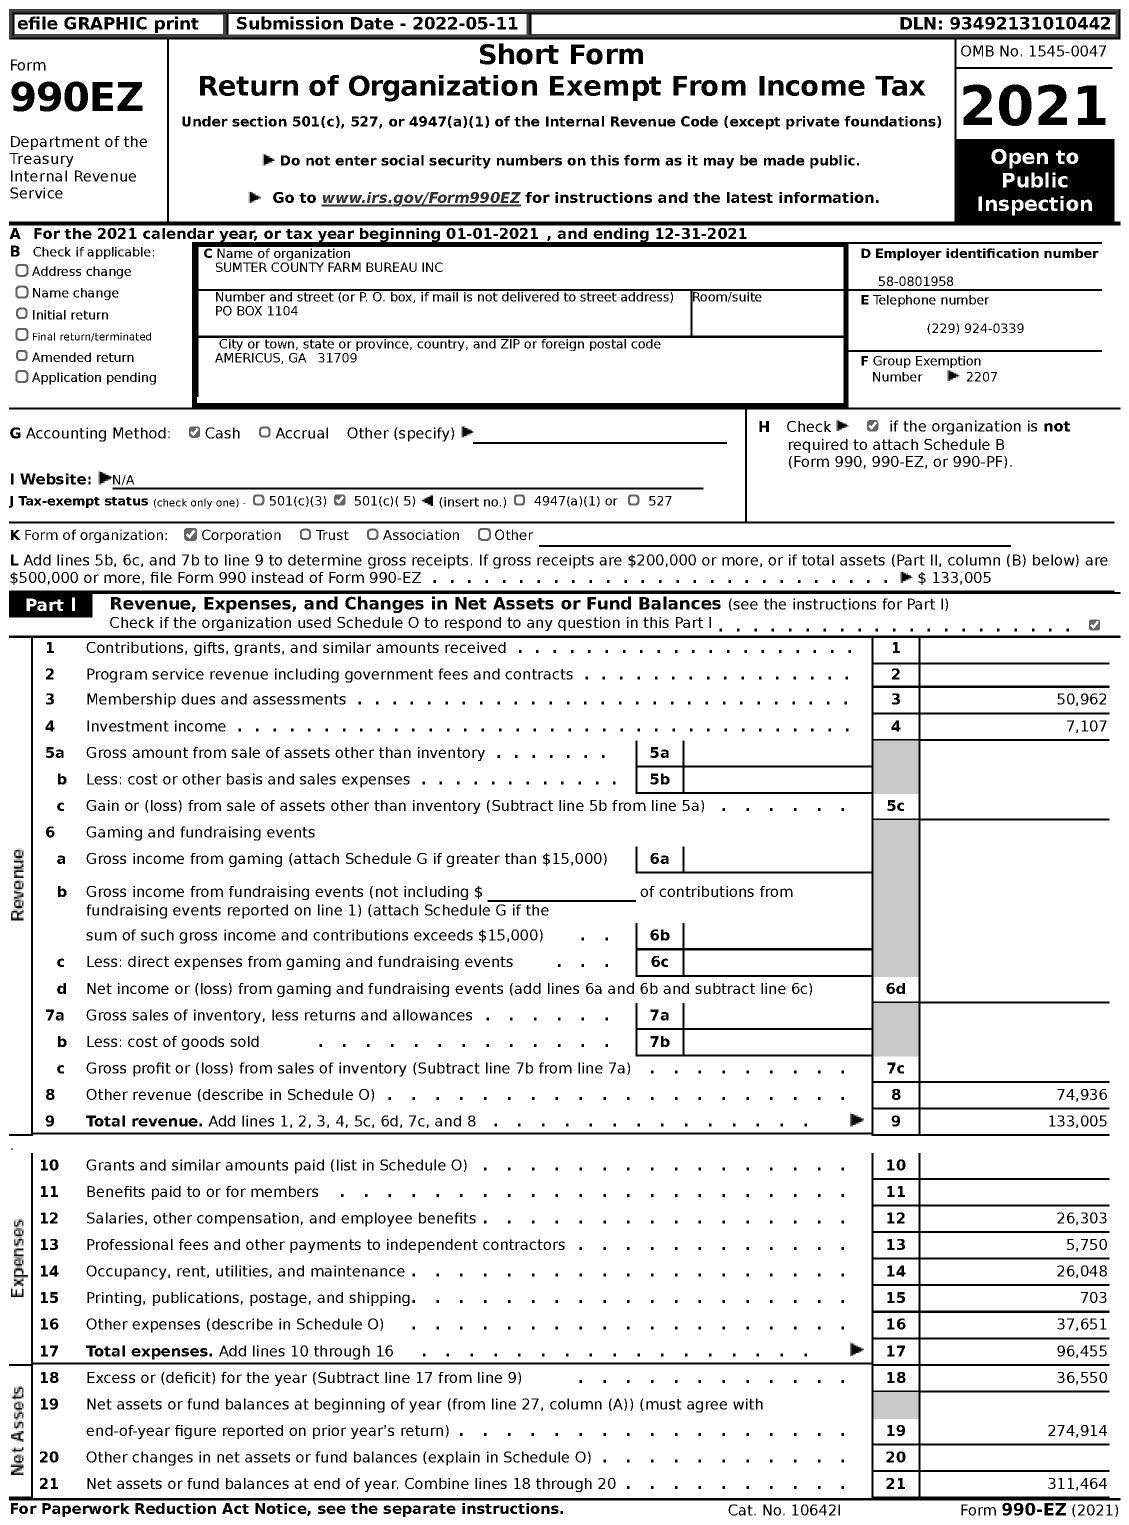 Image of first page of 2021 Form 990EZ for Georgia Farm Bureau Federation - Sumter County Farm Bureau